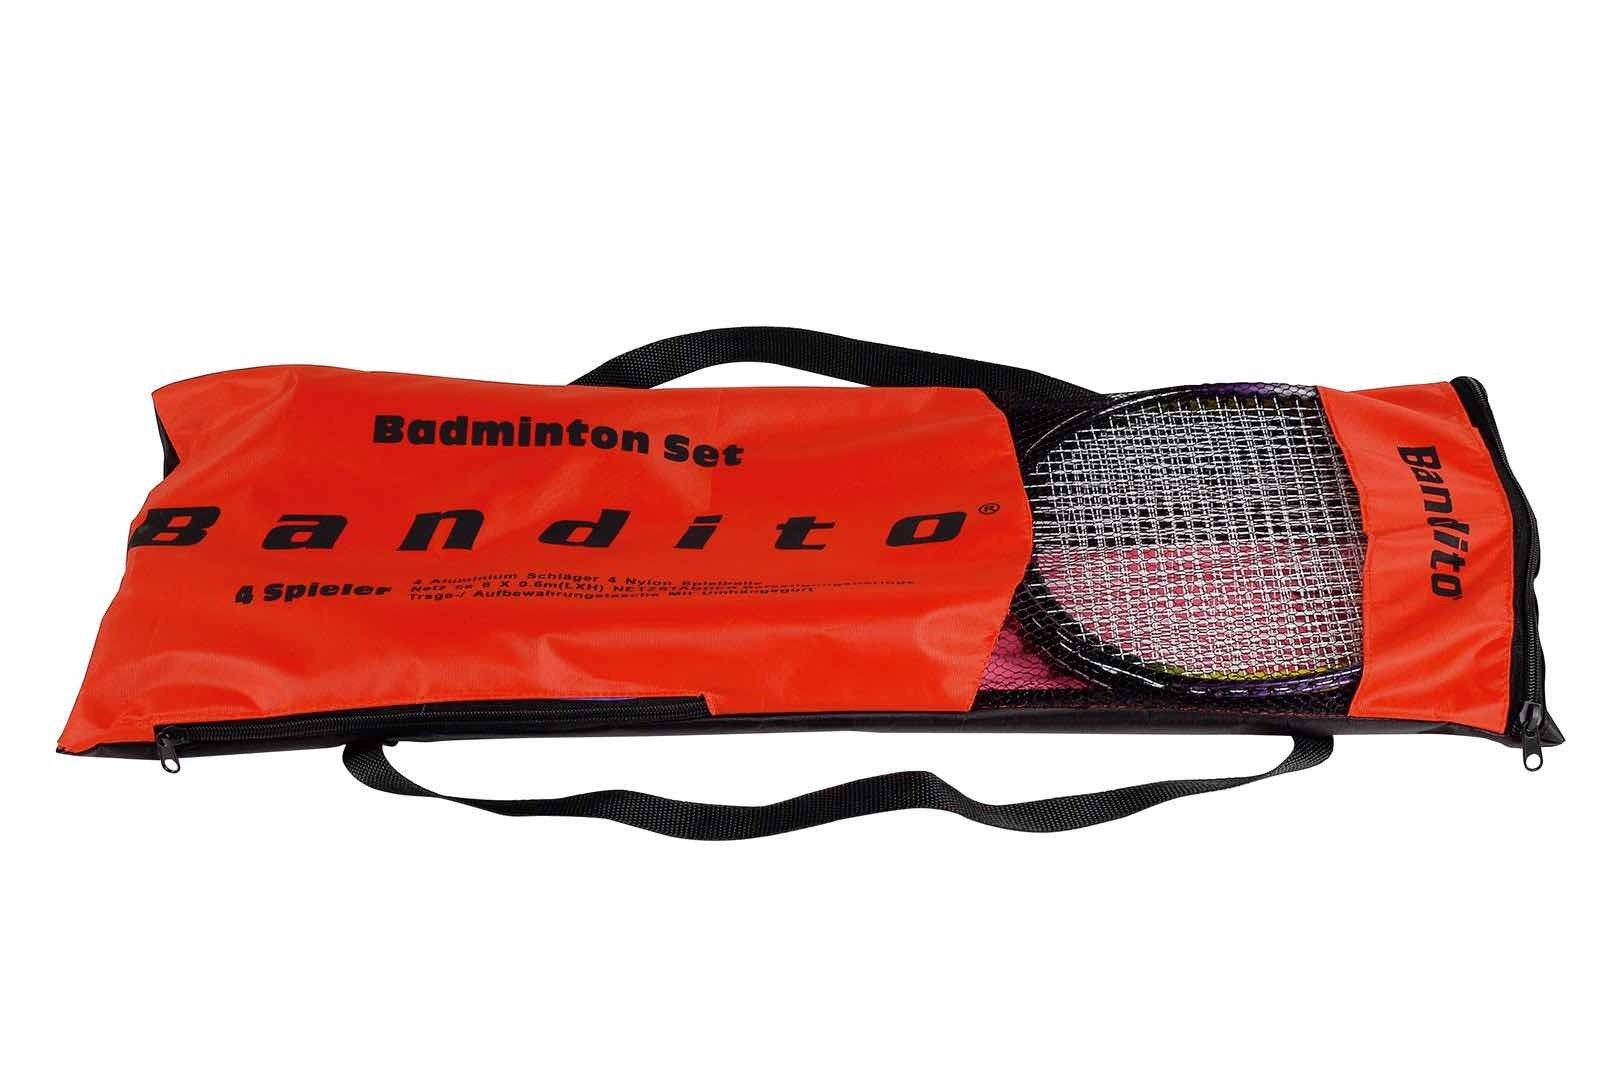 Bandito Badmintonset mit Netzgarnitur